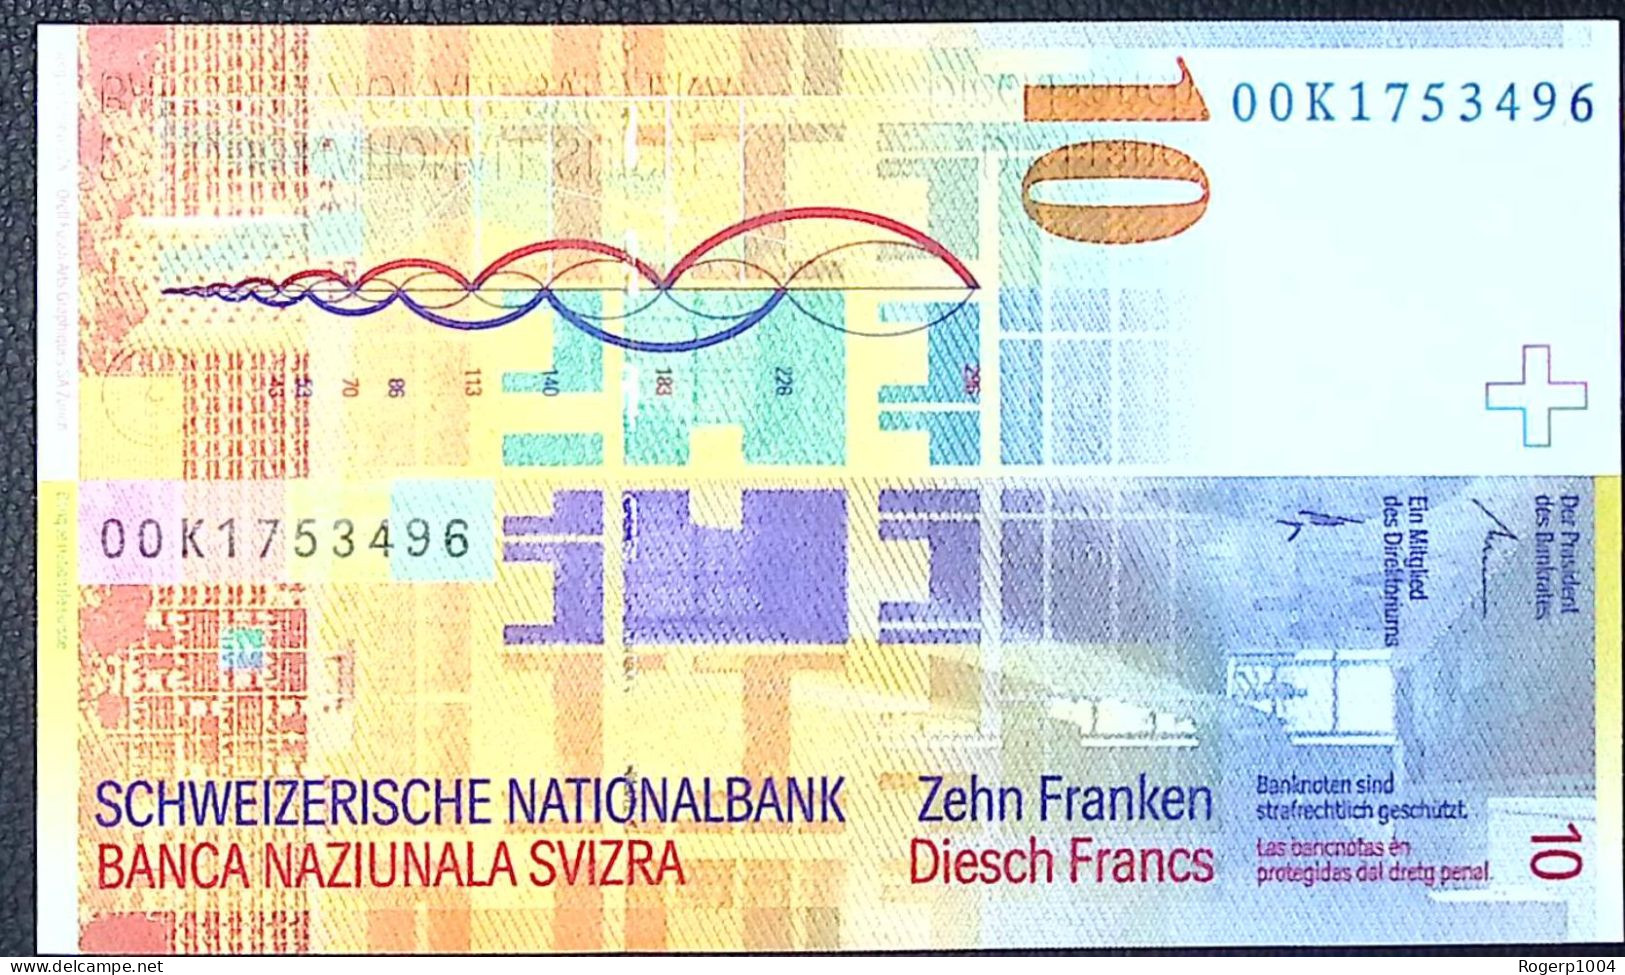 SUISSE/SWITZERLAND * 10 Francs * Le Corbusier * 2000 * Etat/Grade NEUF/UNC - Switzerland